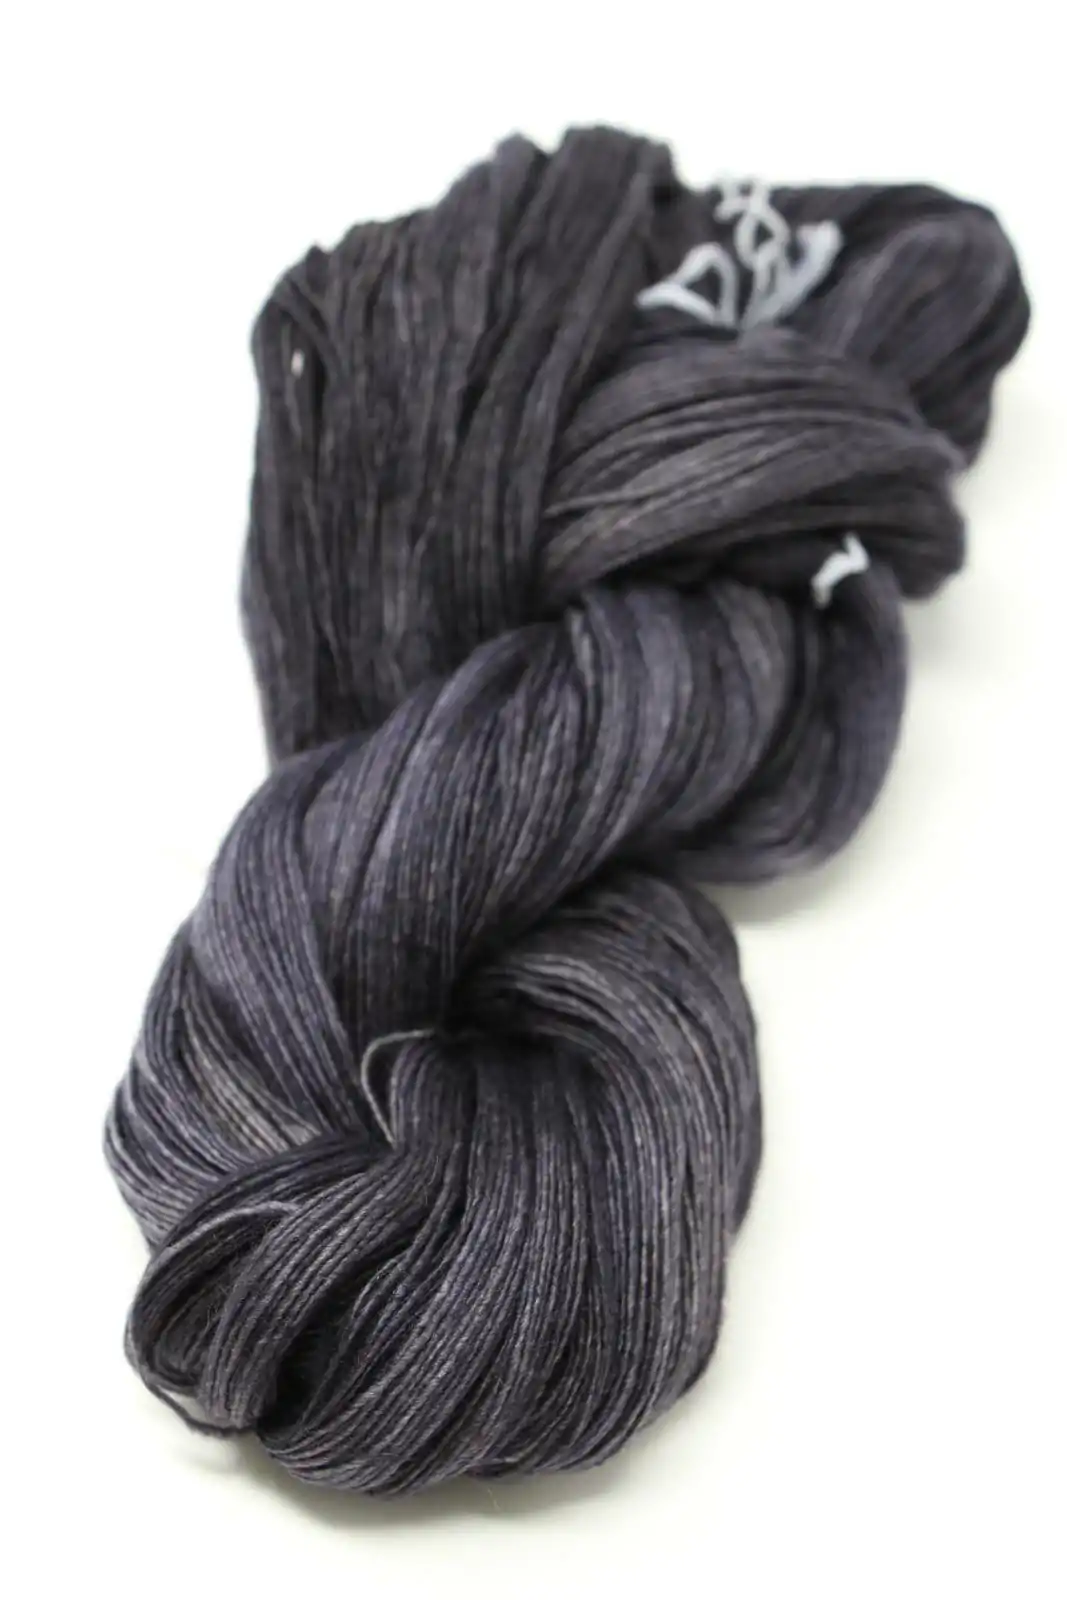 Malabrigo Lace Yarn  Black Forest (145): Free Shipping at Fabulous Yarn